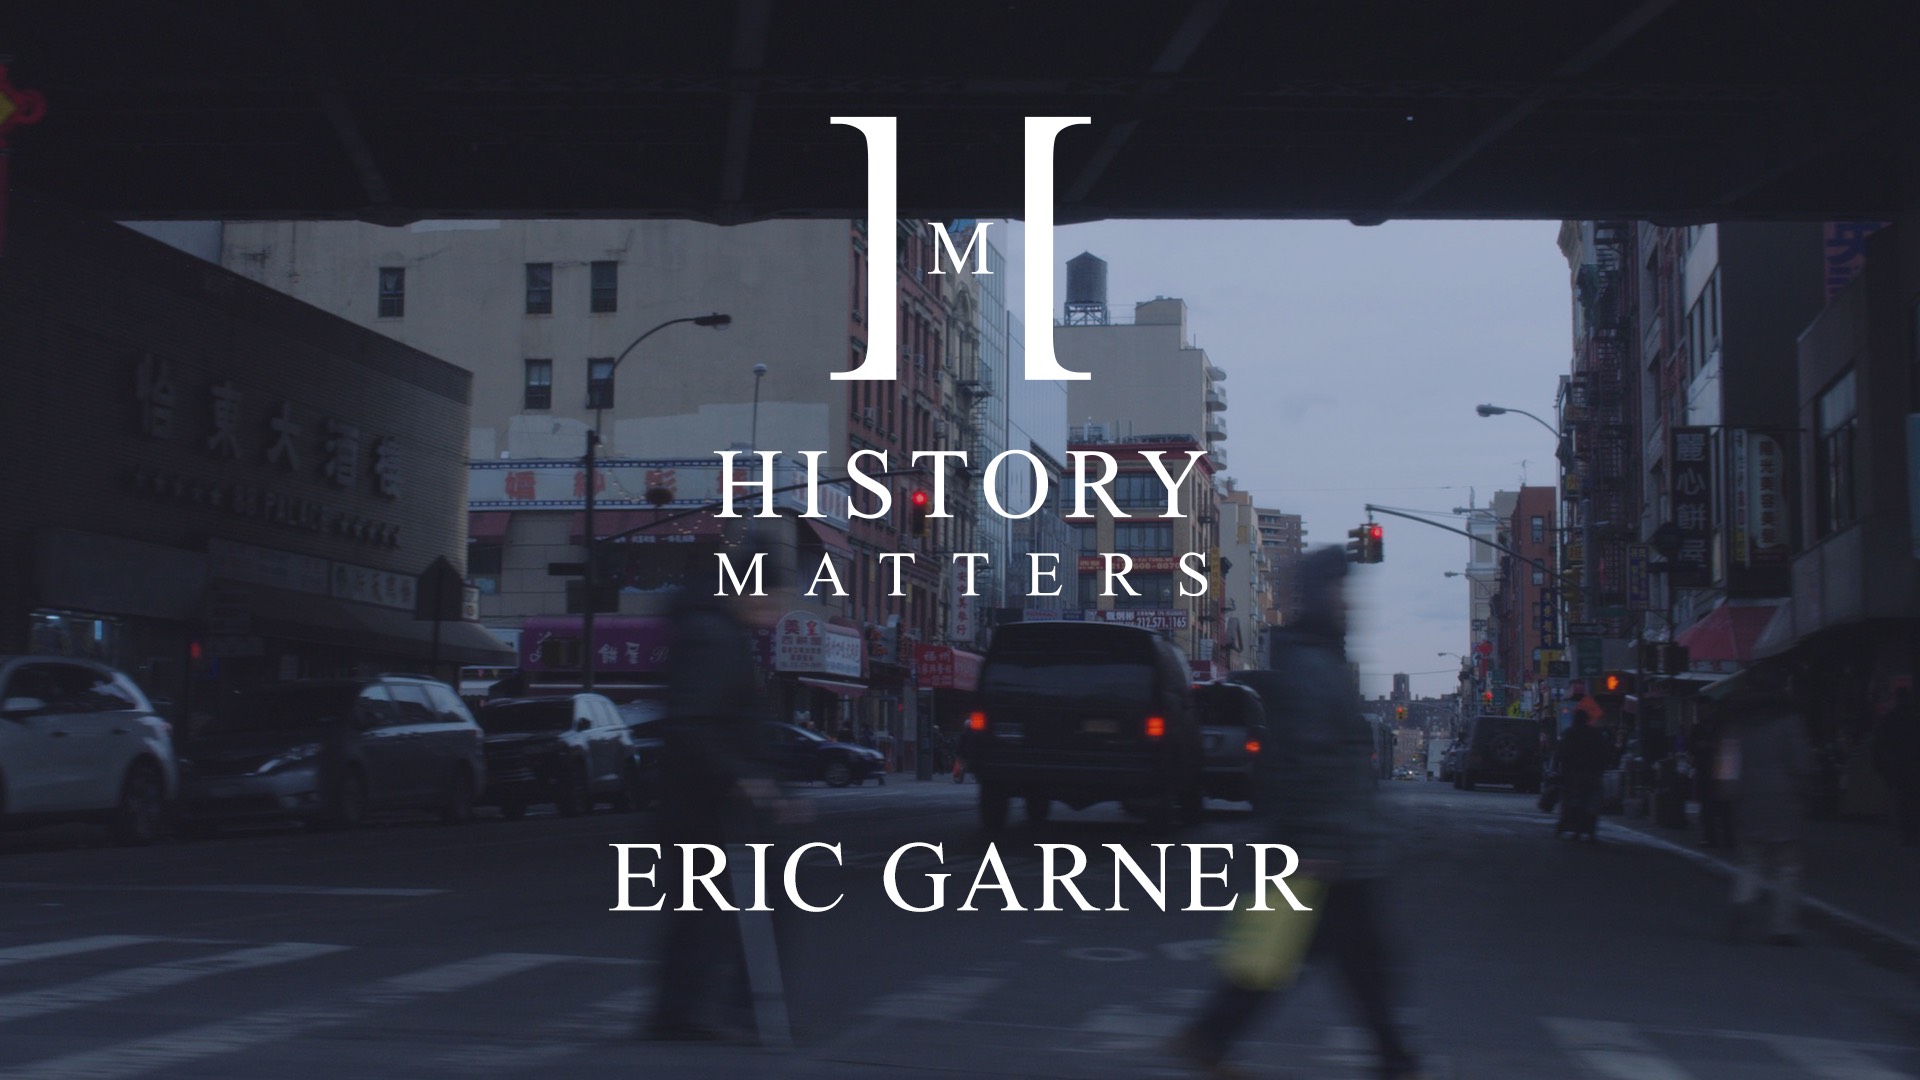 History Matters Eric Garner by Otis Miller